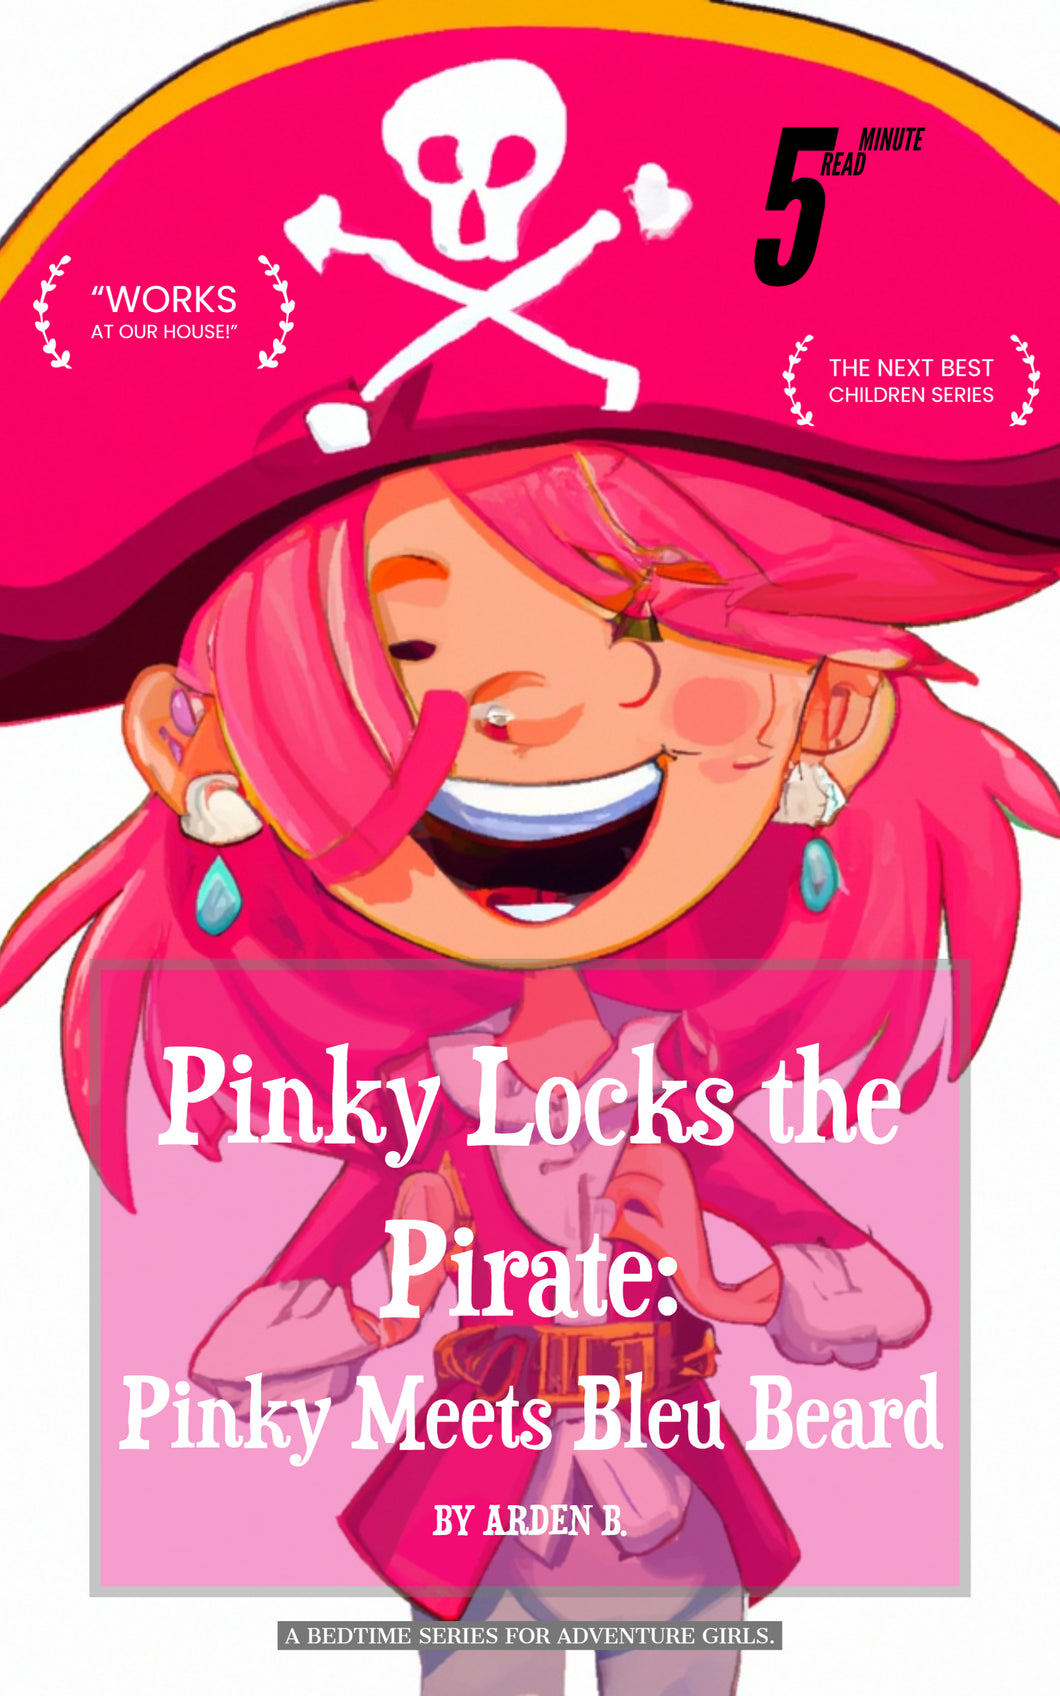 Pinky Locks the Pirate: Pinky Meets Bleu Beard